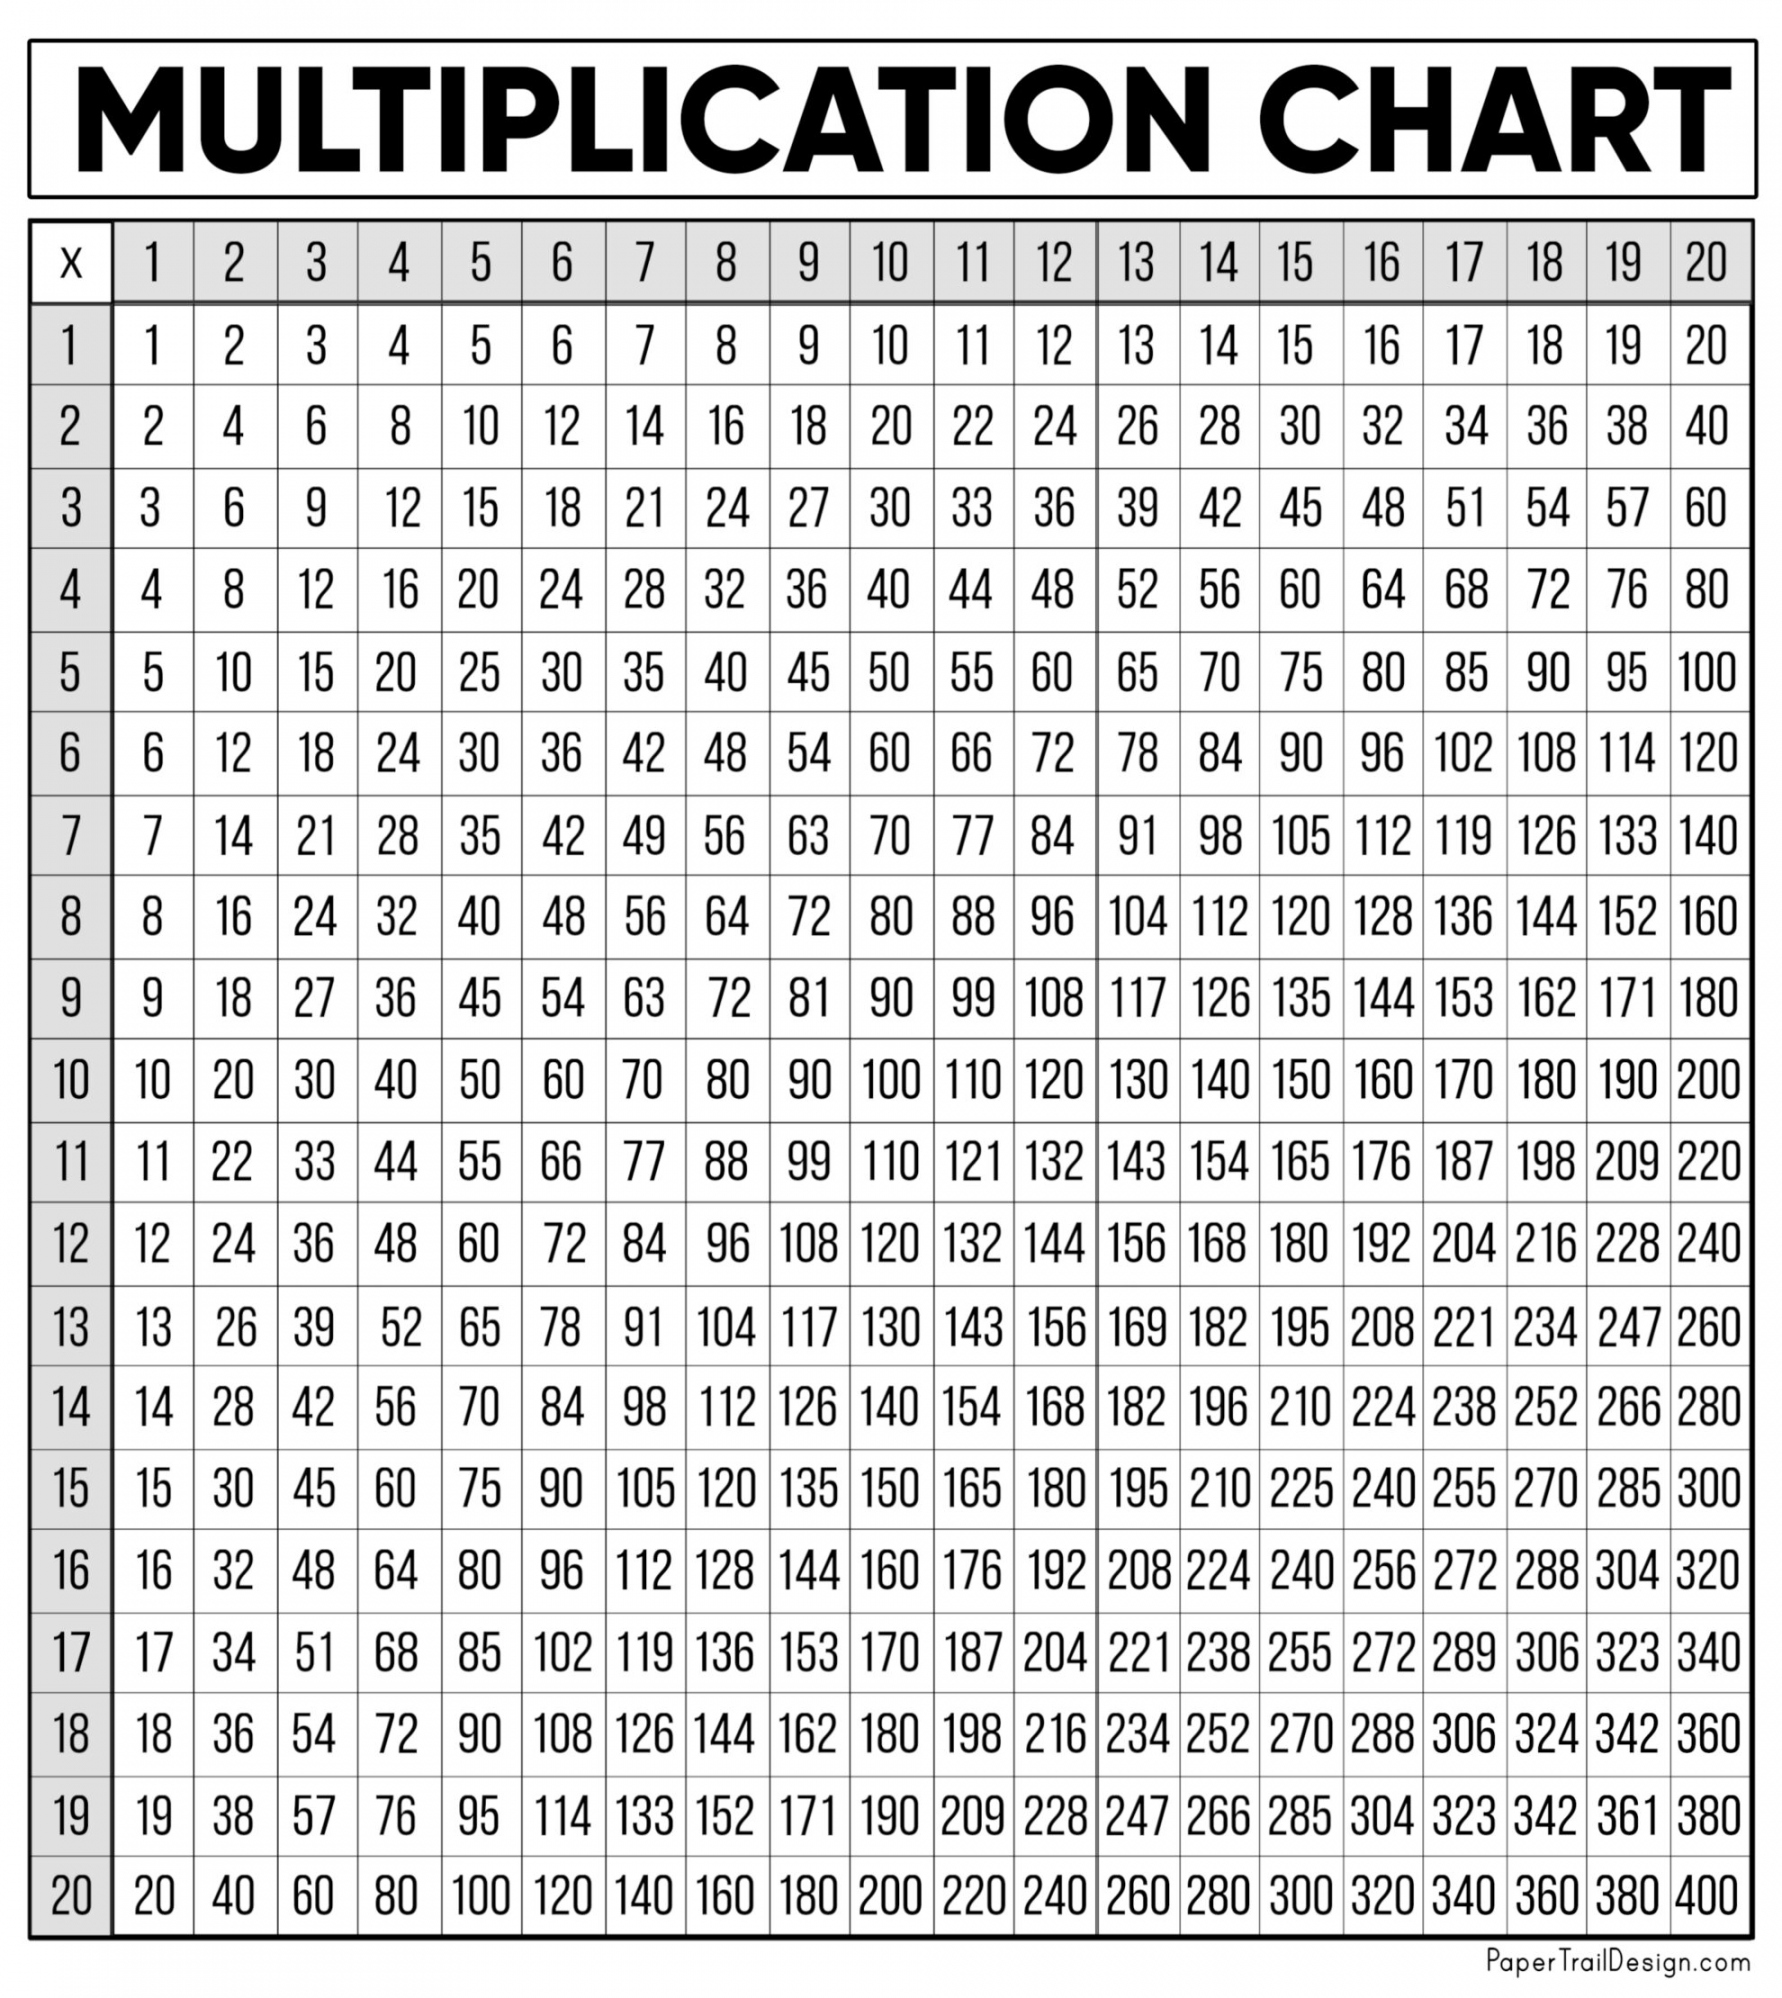 Free Multiplication Chart Printable - Paper Trail Design - FREE Printables - Multiplication Chart Free Printable